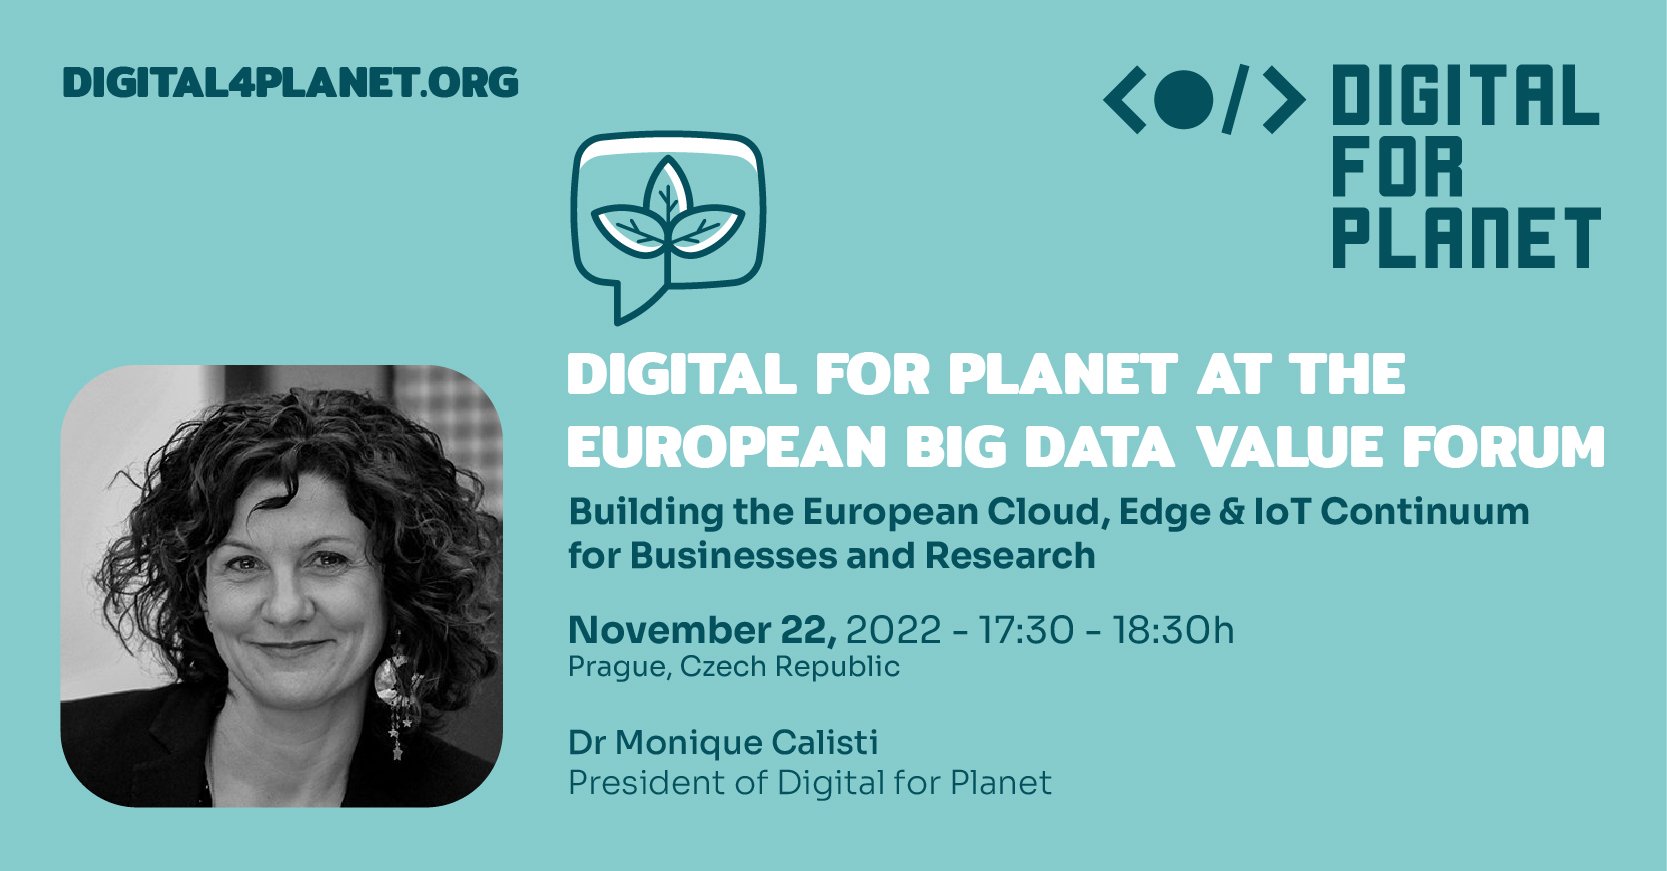 Digital for Planet at EBDVF 2022